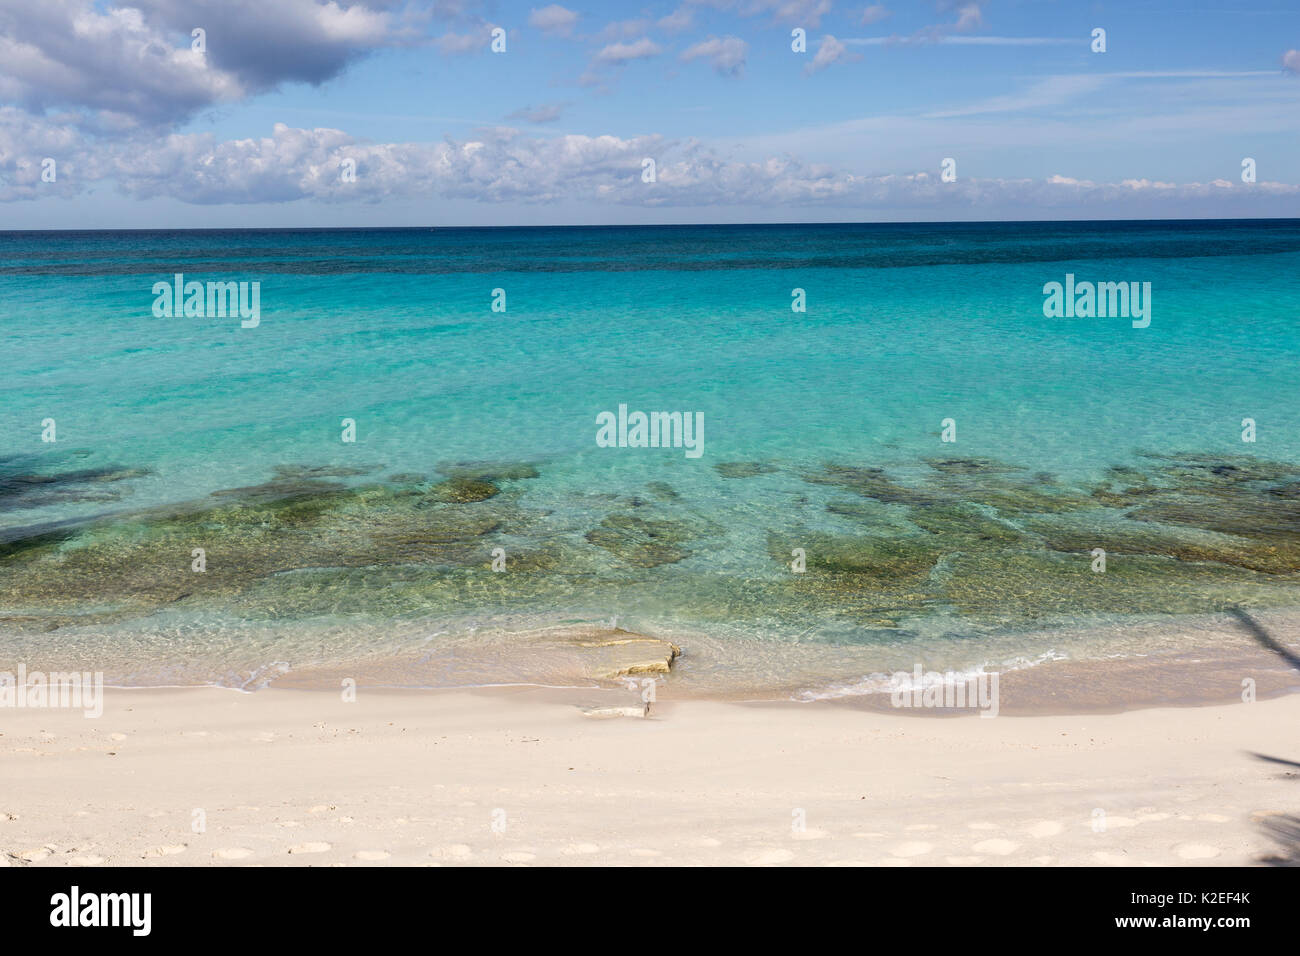 Calm sea and beach, South Bimini, Bahamas. The Bahamas National Shark Sanctuary, West Atlantic Ocean. Stock Photo